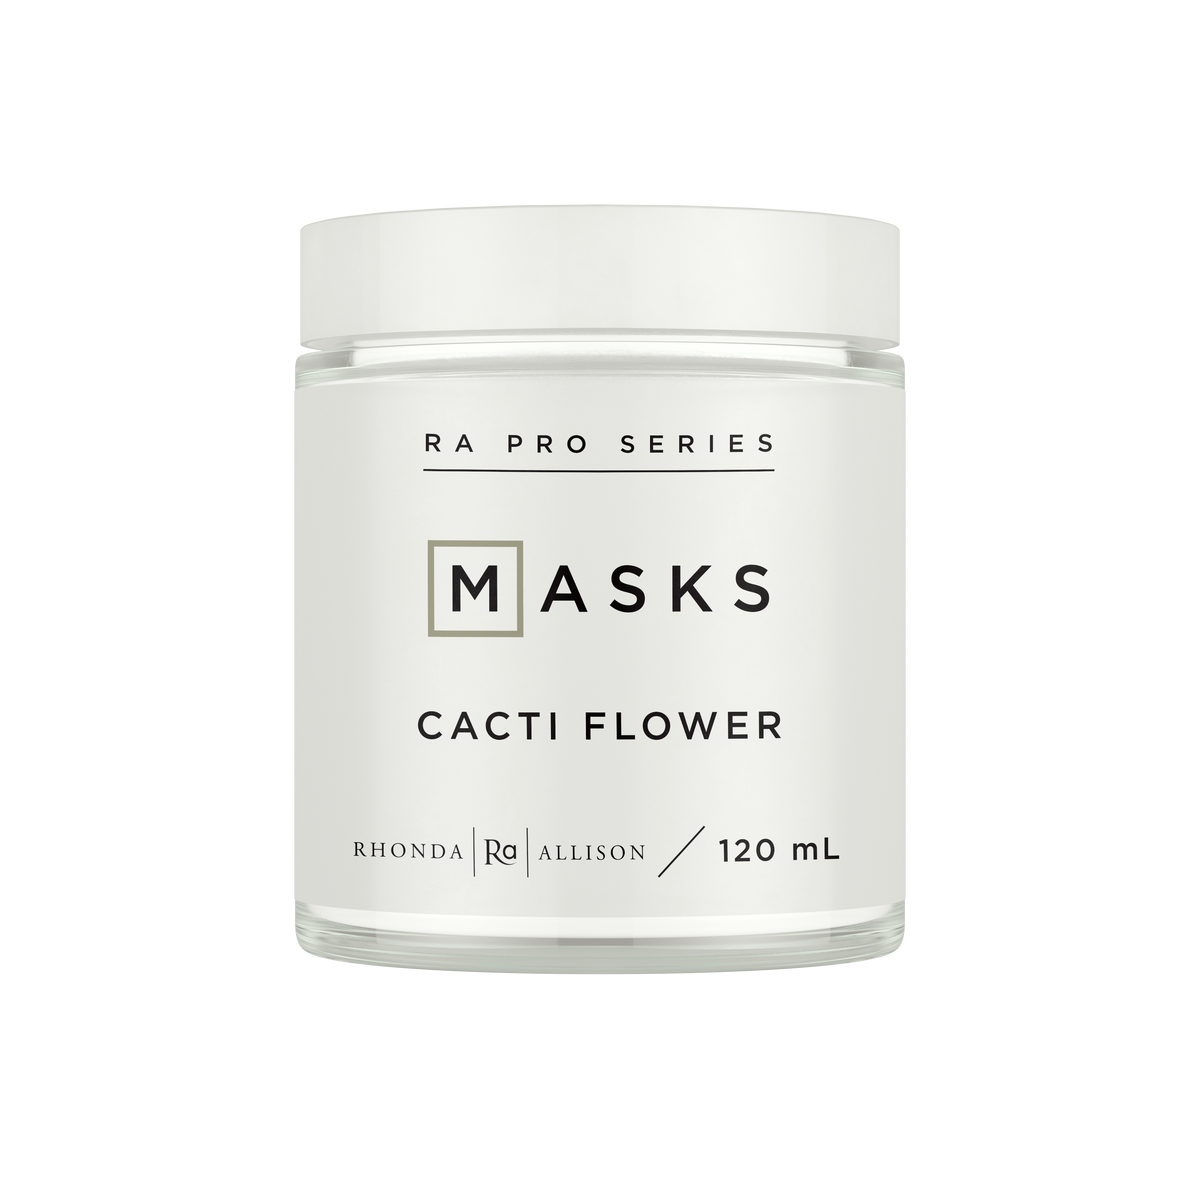 Cacti Flower Mask